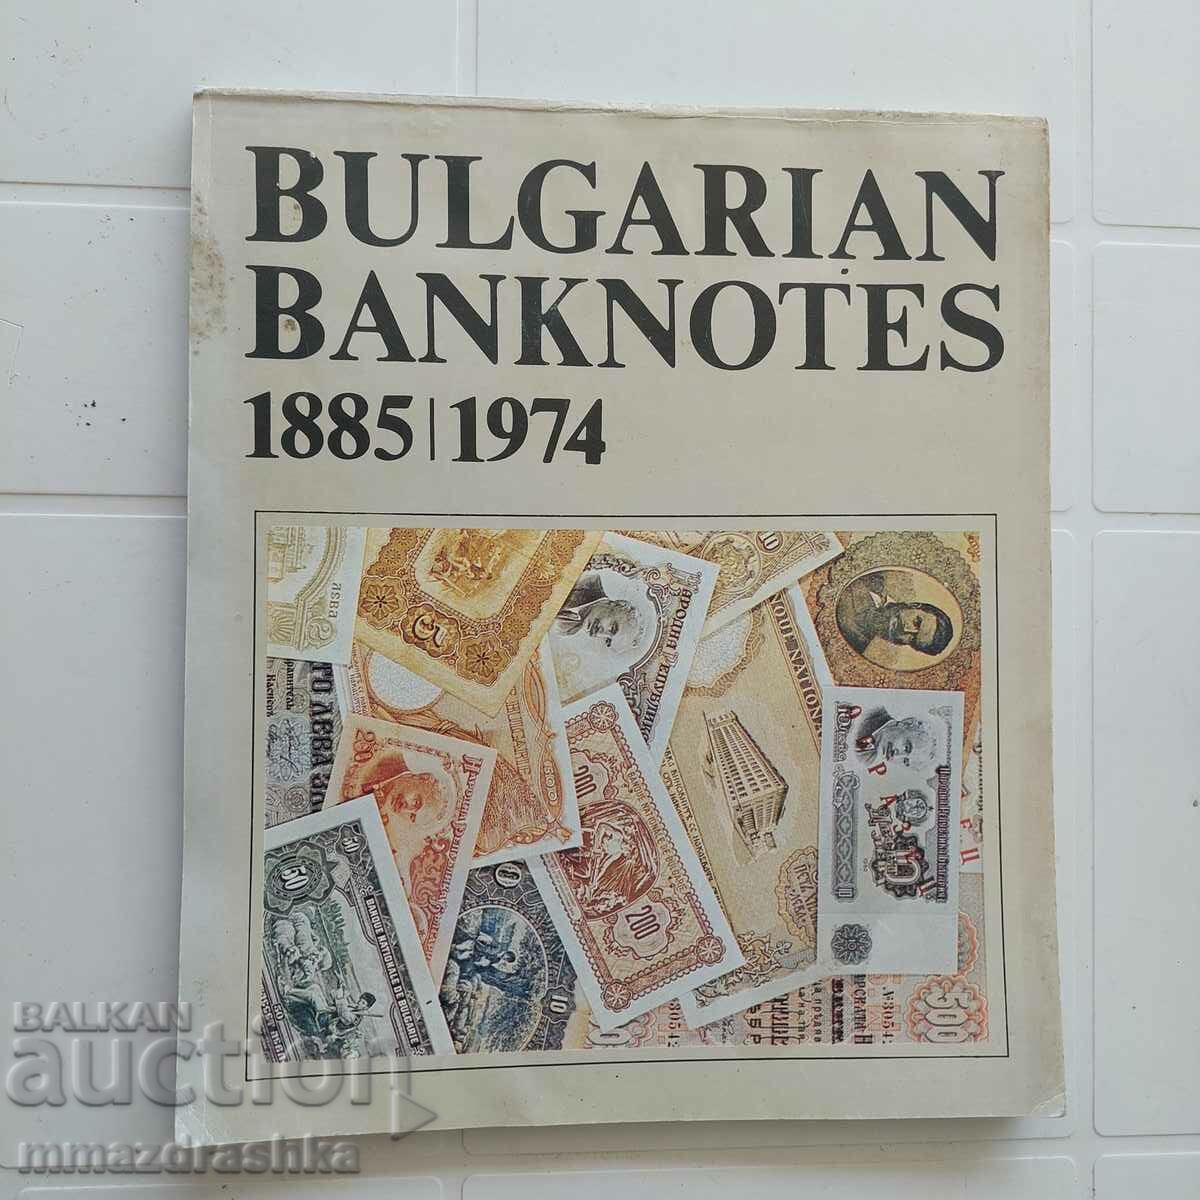 Bancnote bulgare, ediția 1982